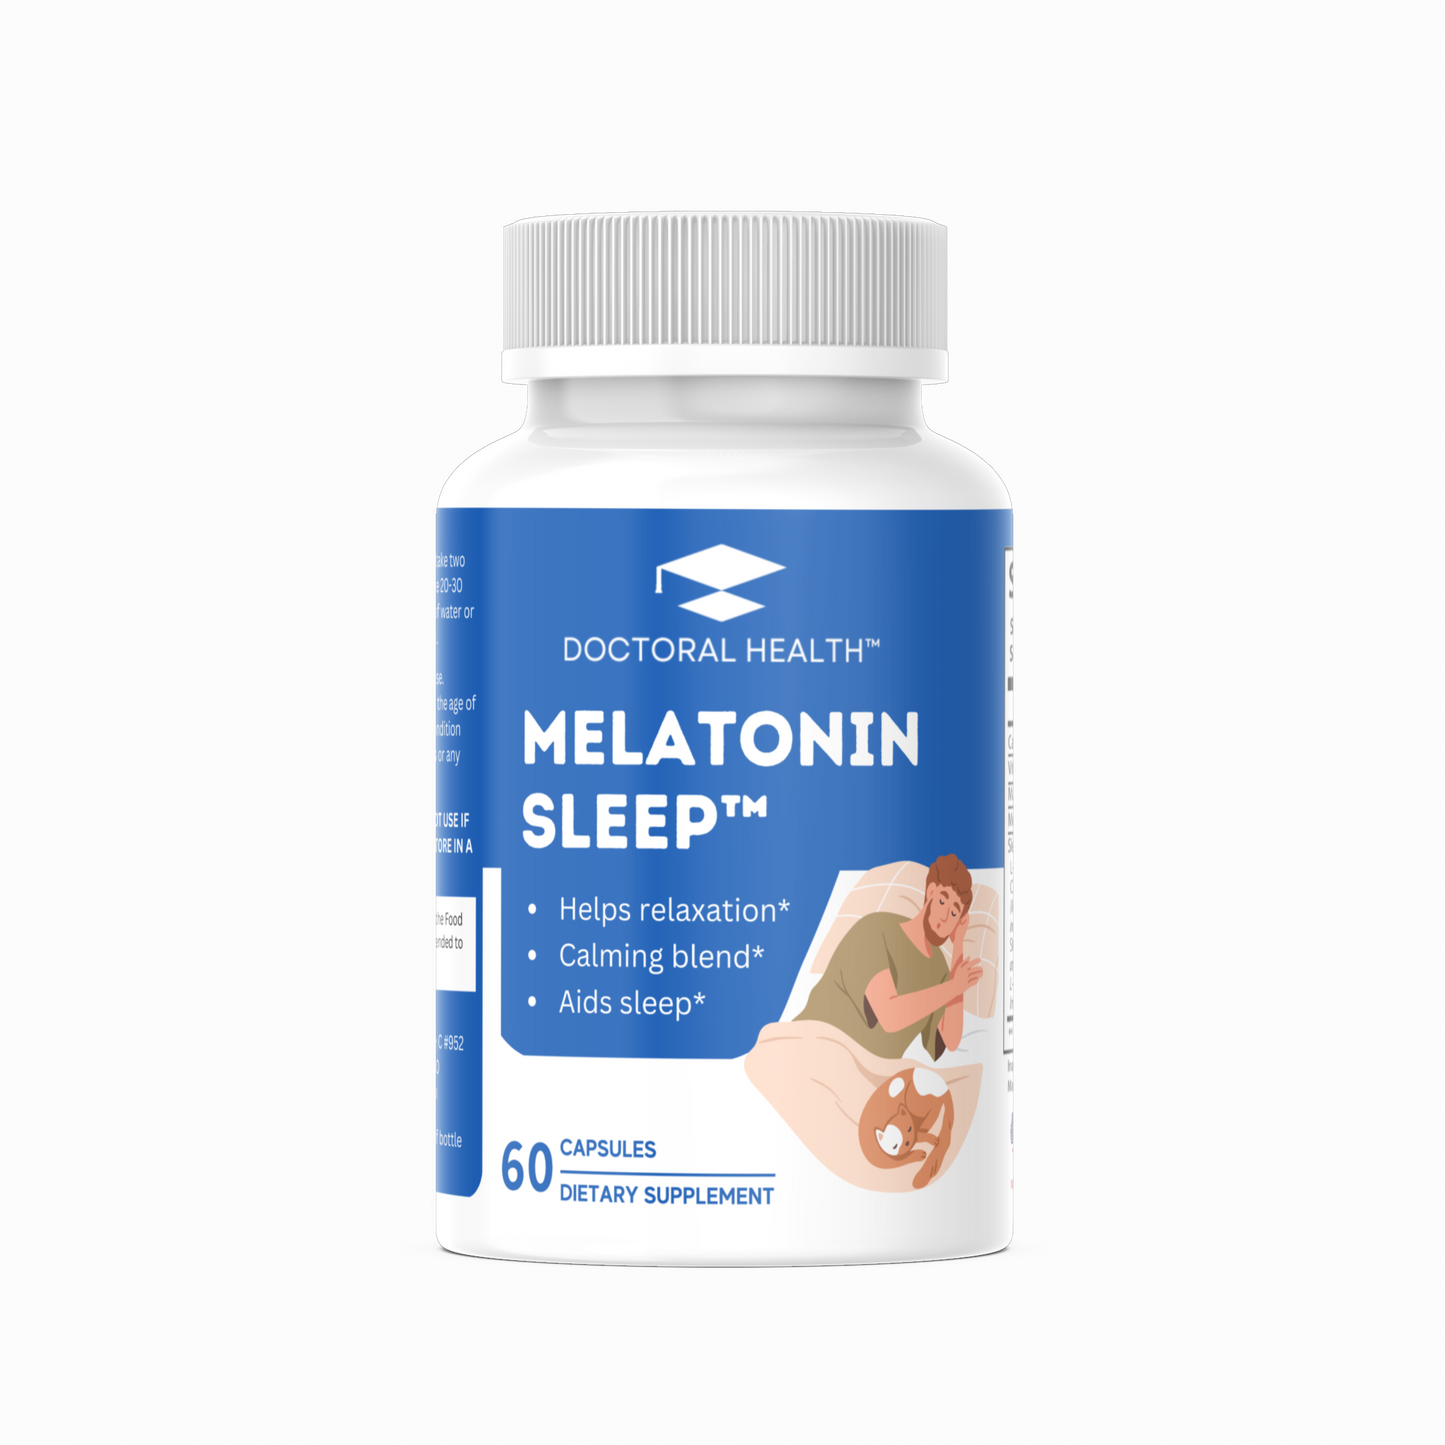 Melatonin Sleep™